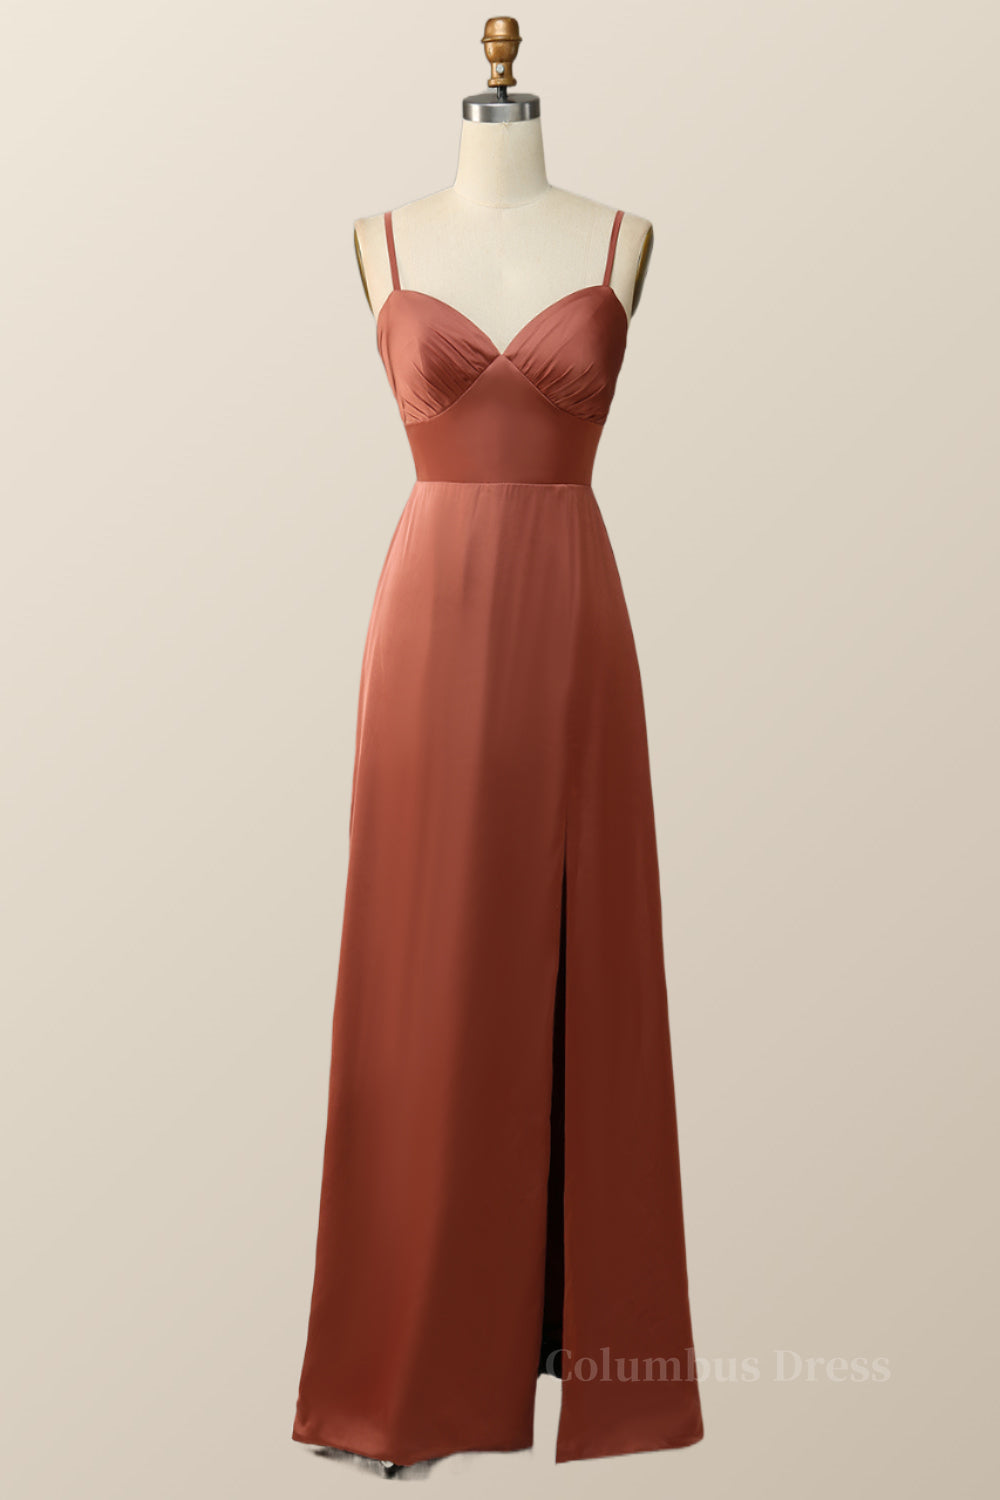 Straps Terracotta A-line Empire Long Corset Bridesmaid Dress outfit, Prom Dresses Classy